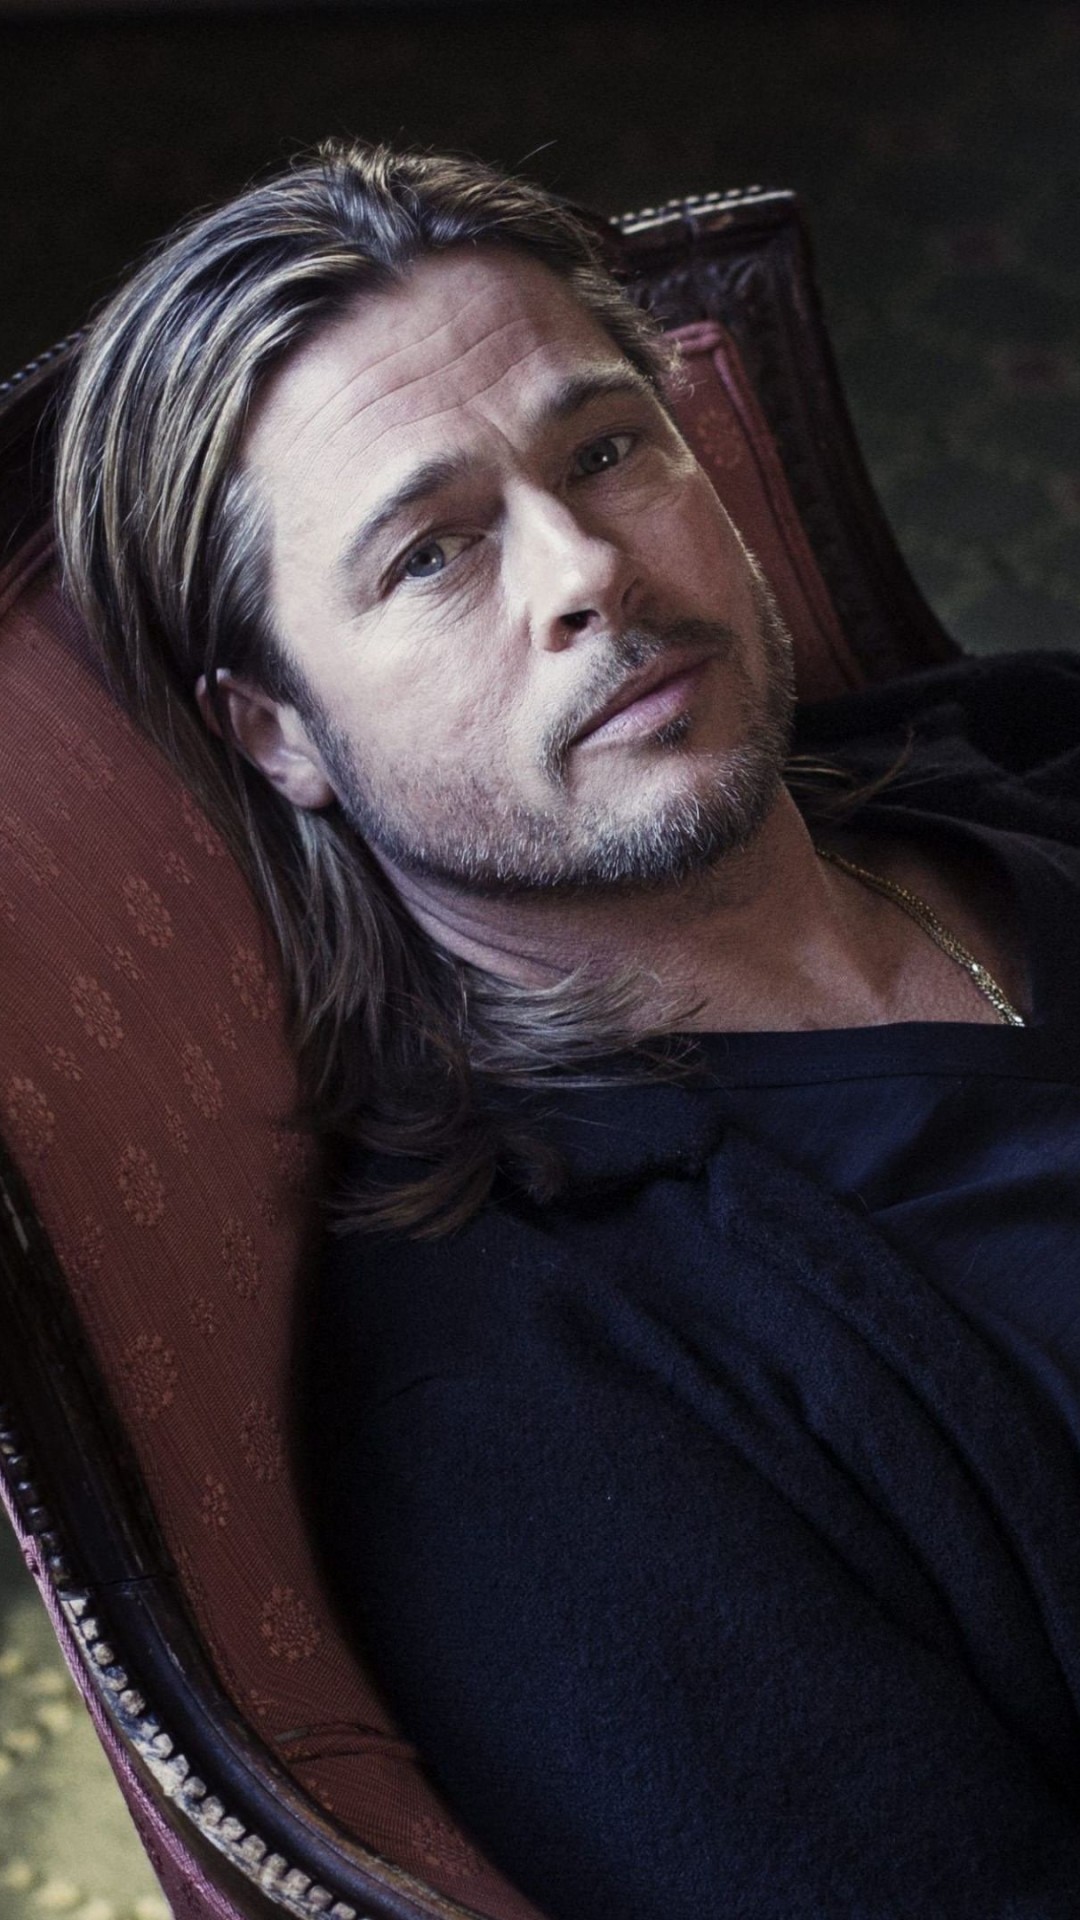 Brad Pitt Sitting On Chair Wallpaper for SAMSUNG Galaxy Note 3